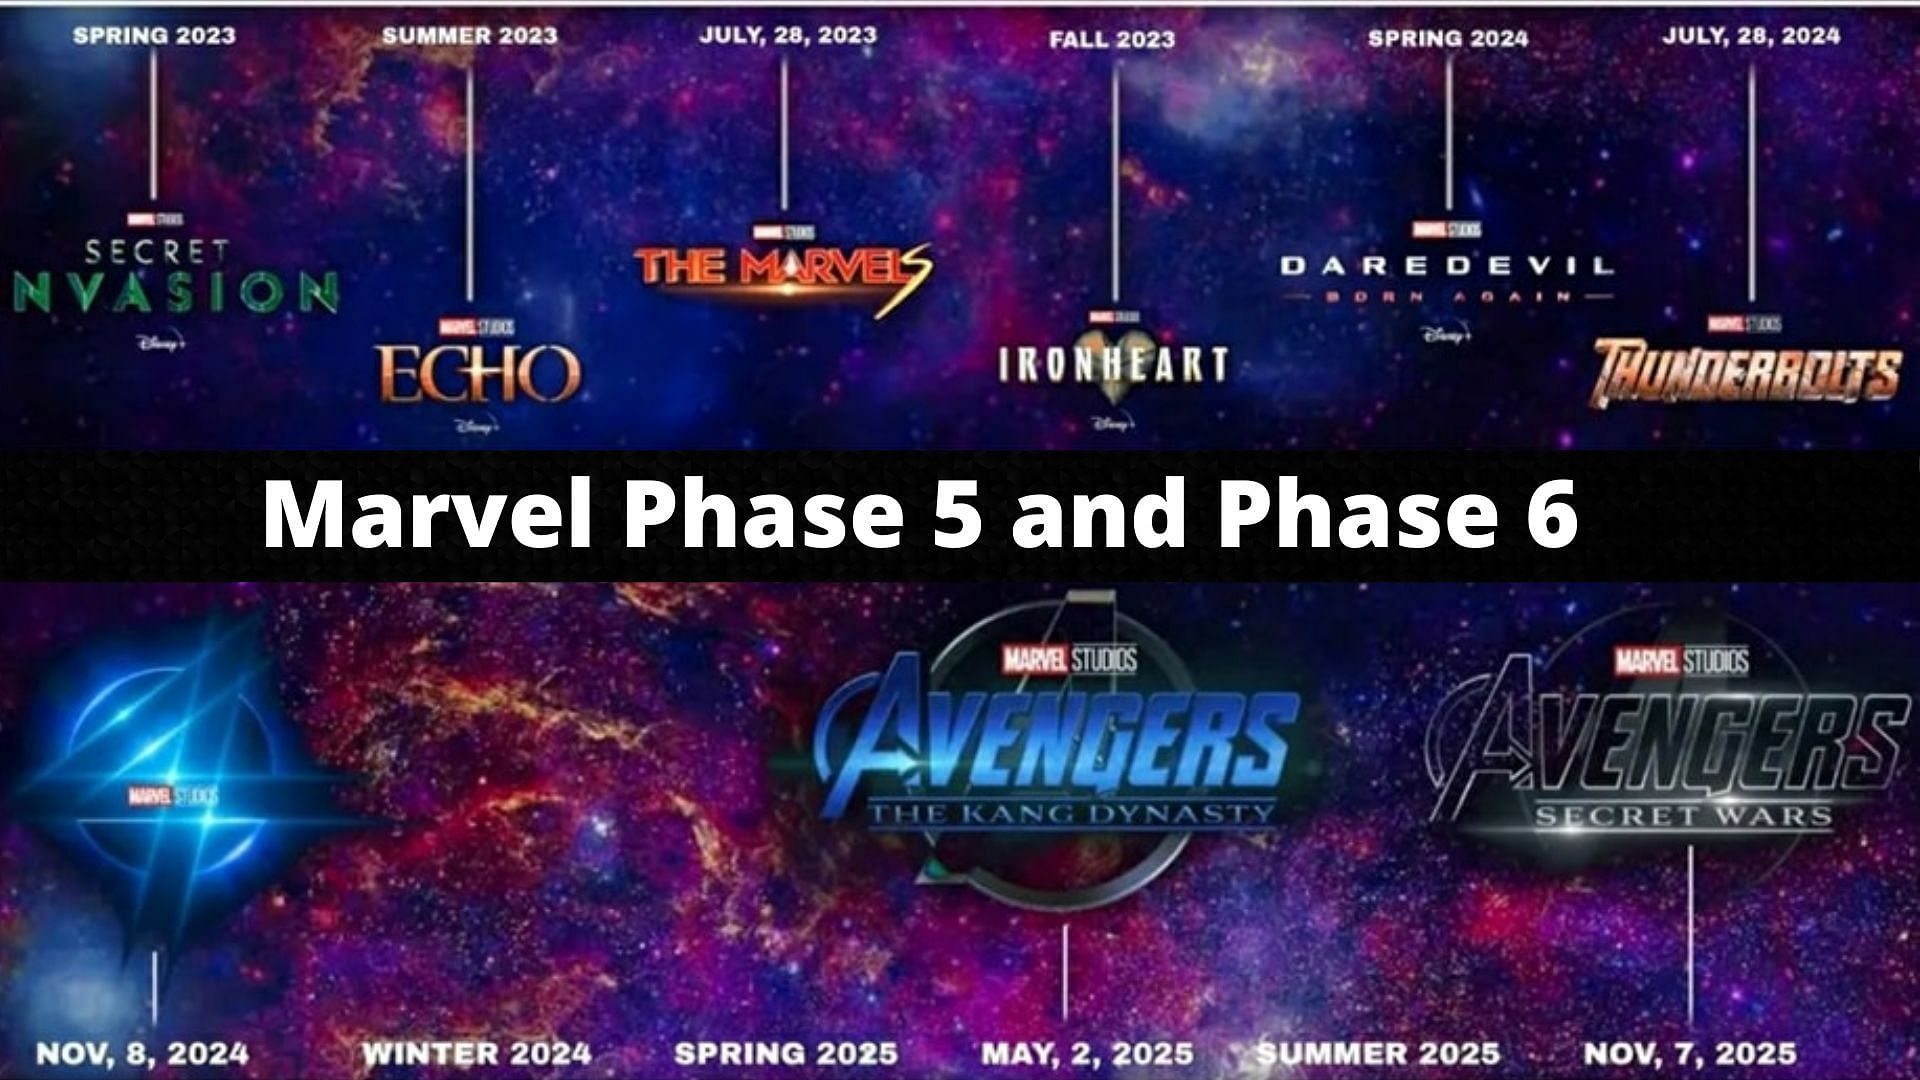 The Marvel Cinematic Universe : Phase 4 by Metropolis-Hero1125 on DeviantArt